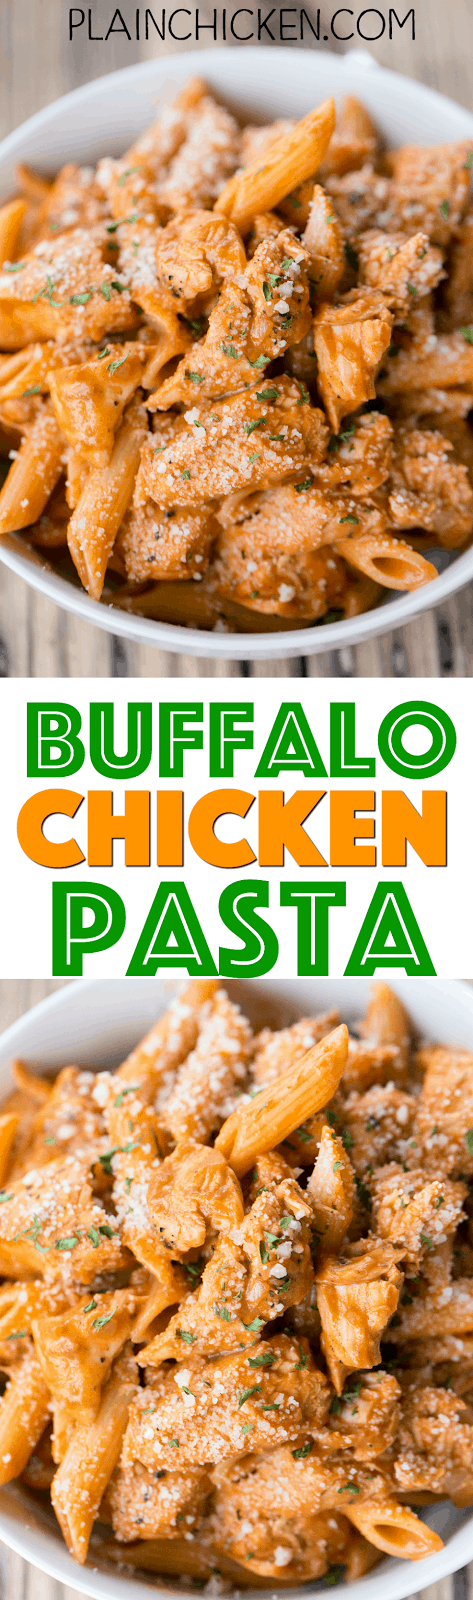 Buffalo Chicken Pasta - Plain Chicken